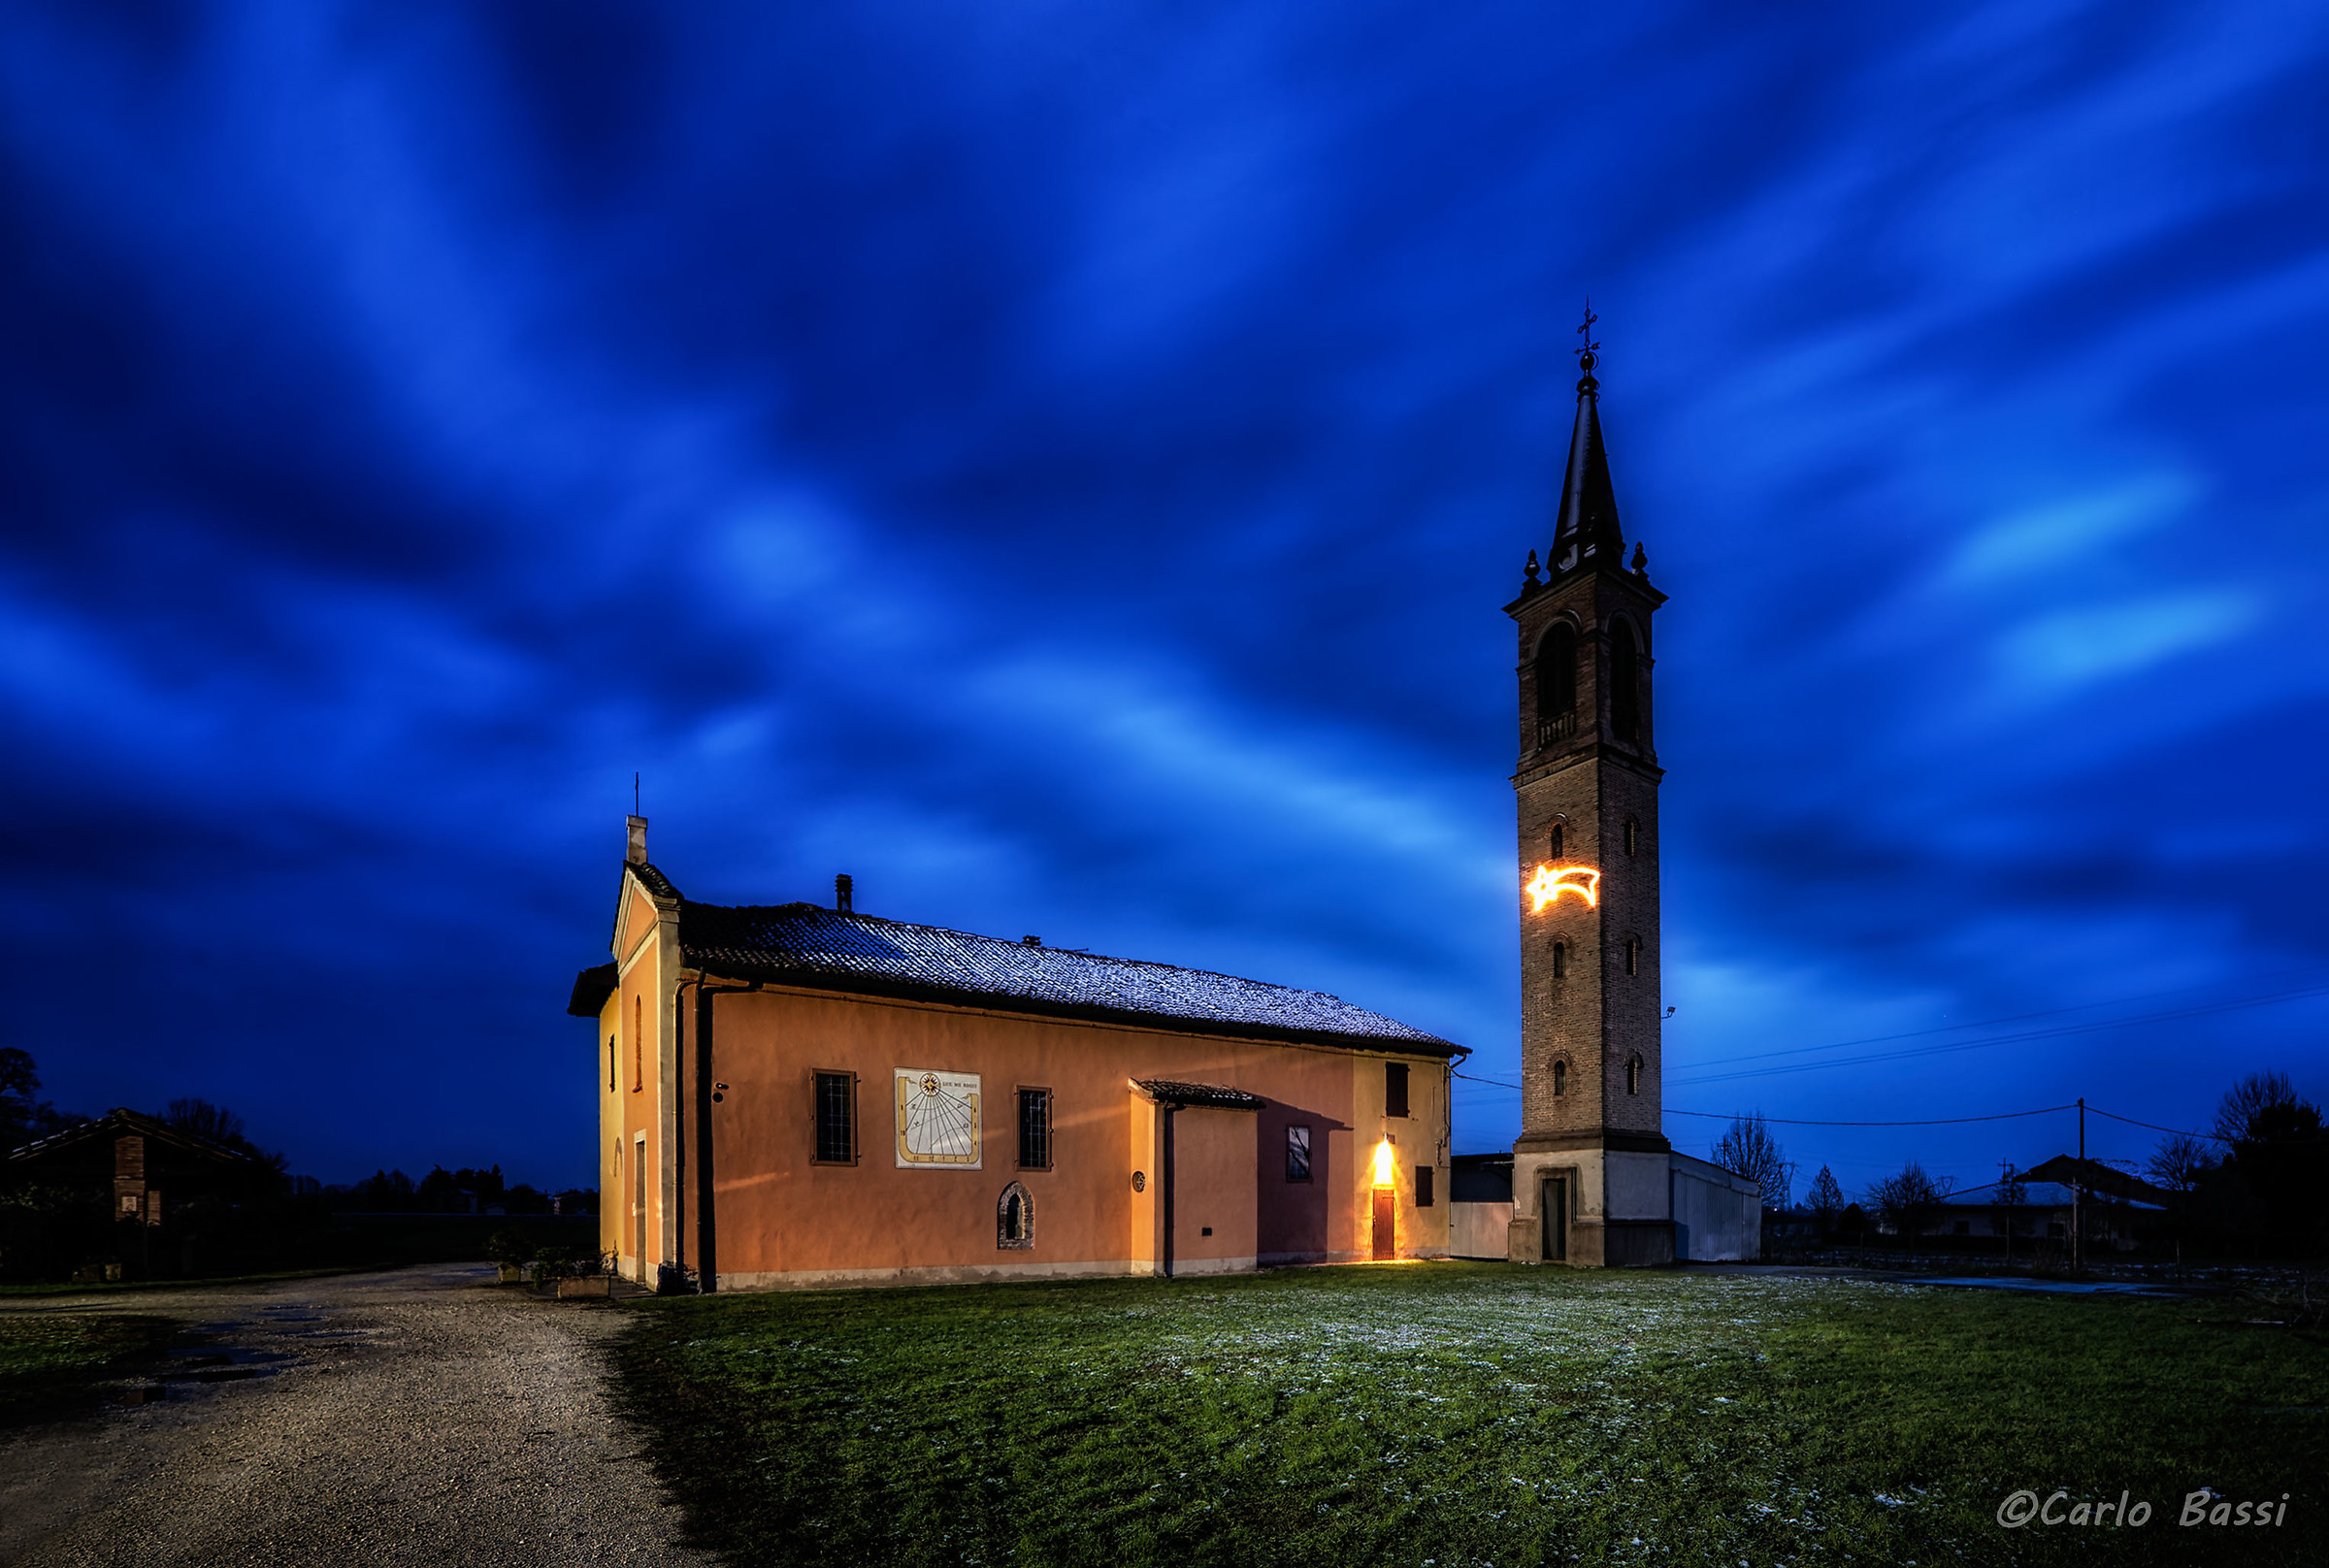 The church of Santa Margherita in Armarolo...